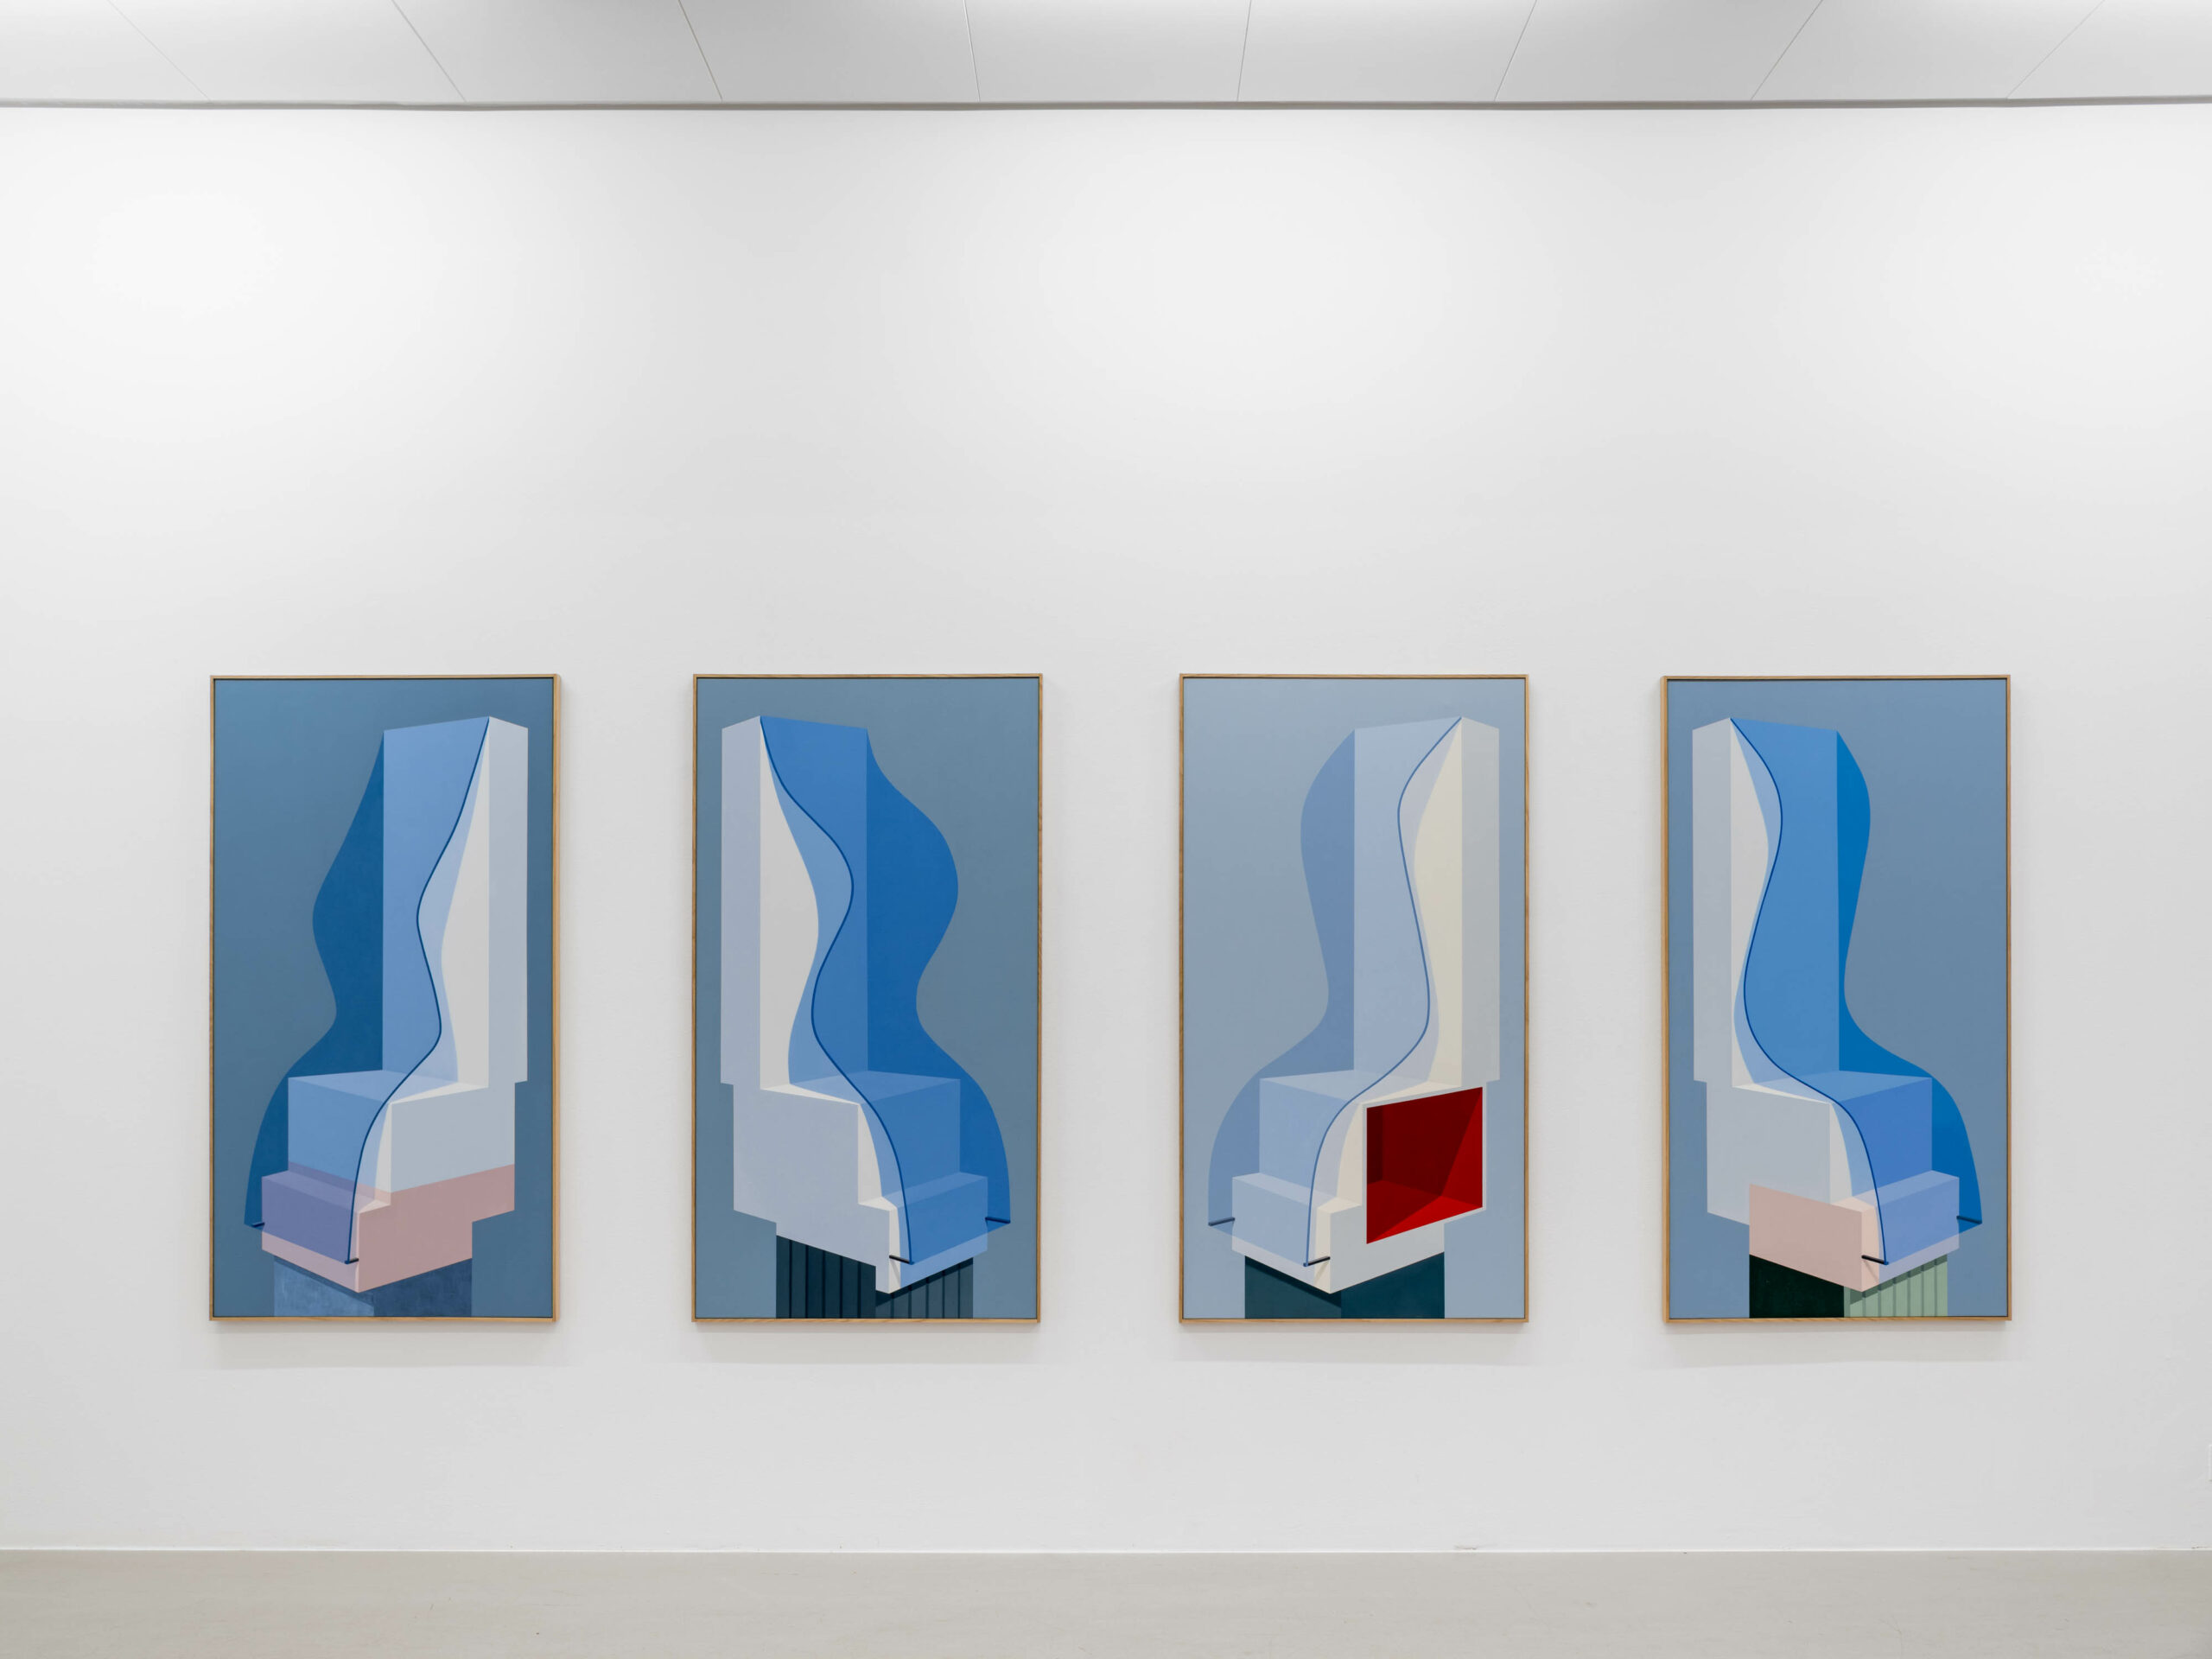 Installation view, Elin Odentia, The Waves, 2020, Cecilia Hillström Gallery. Photo: Jean-Baptiste Béranger  